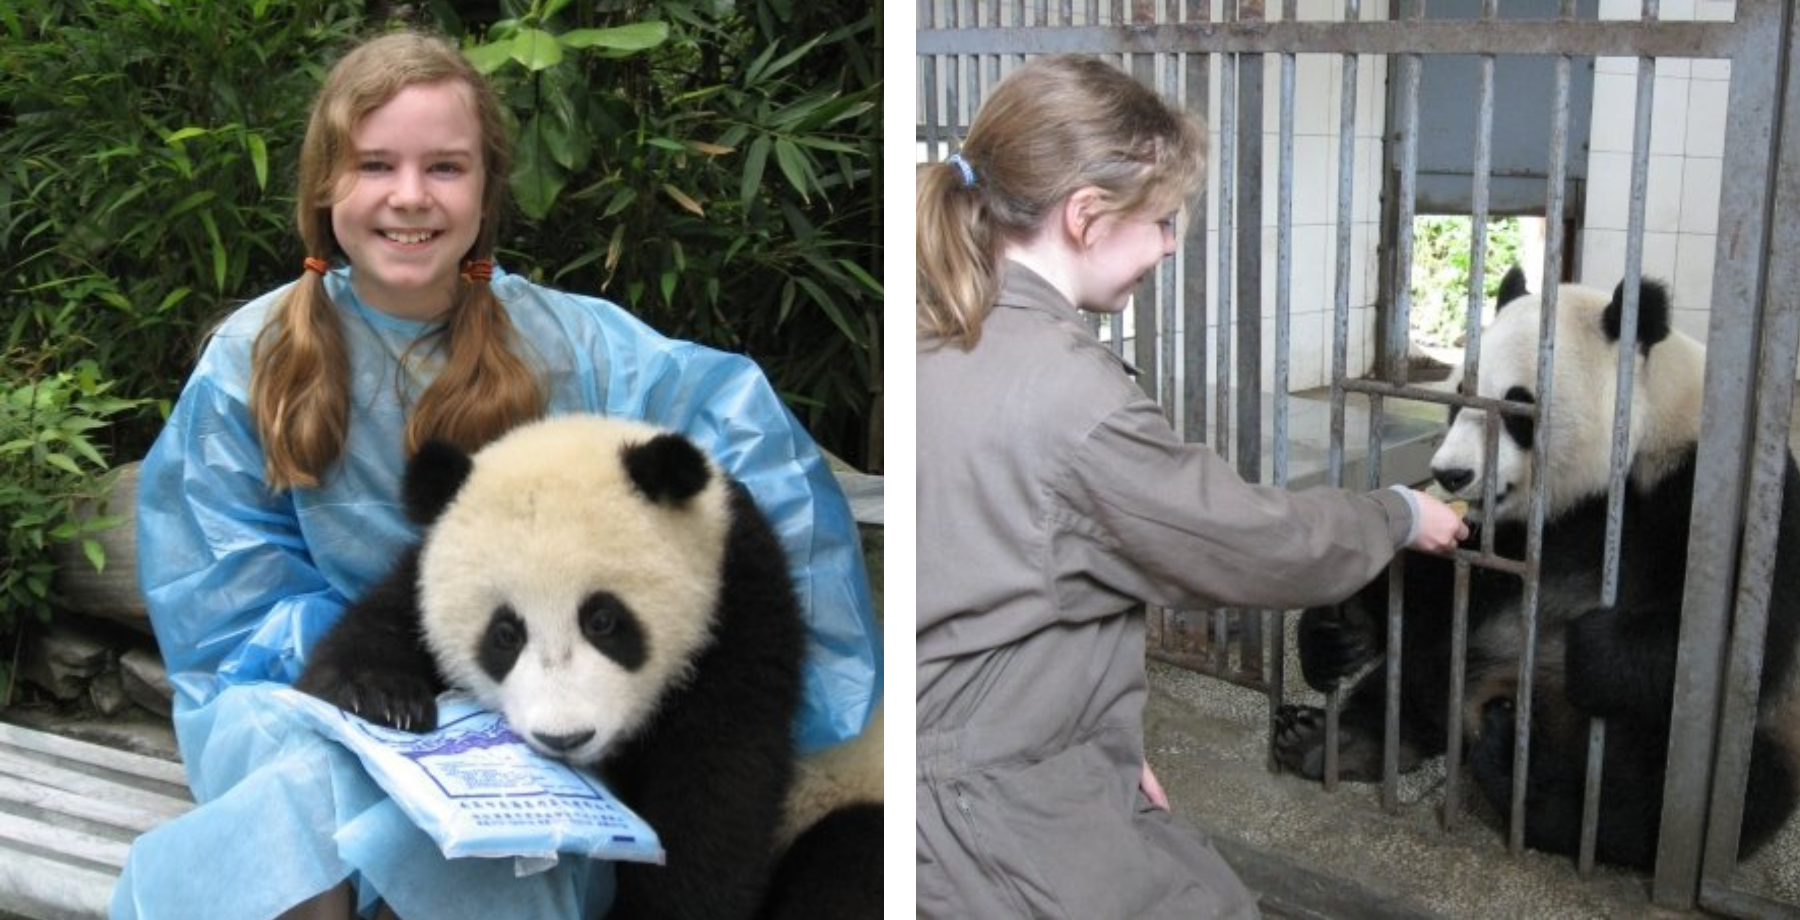 Hailey with Hua Mei the panda